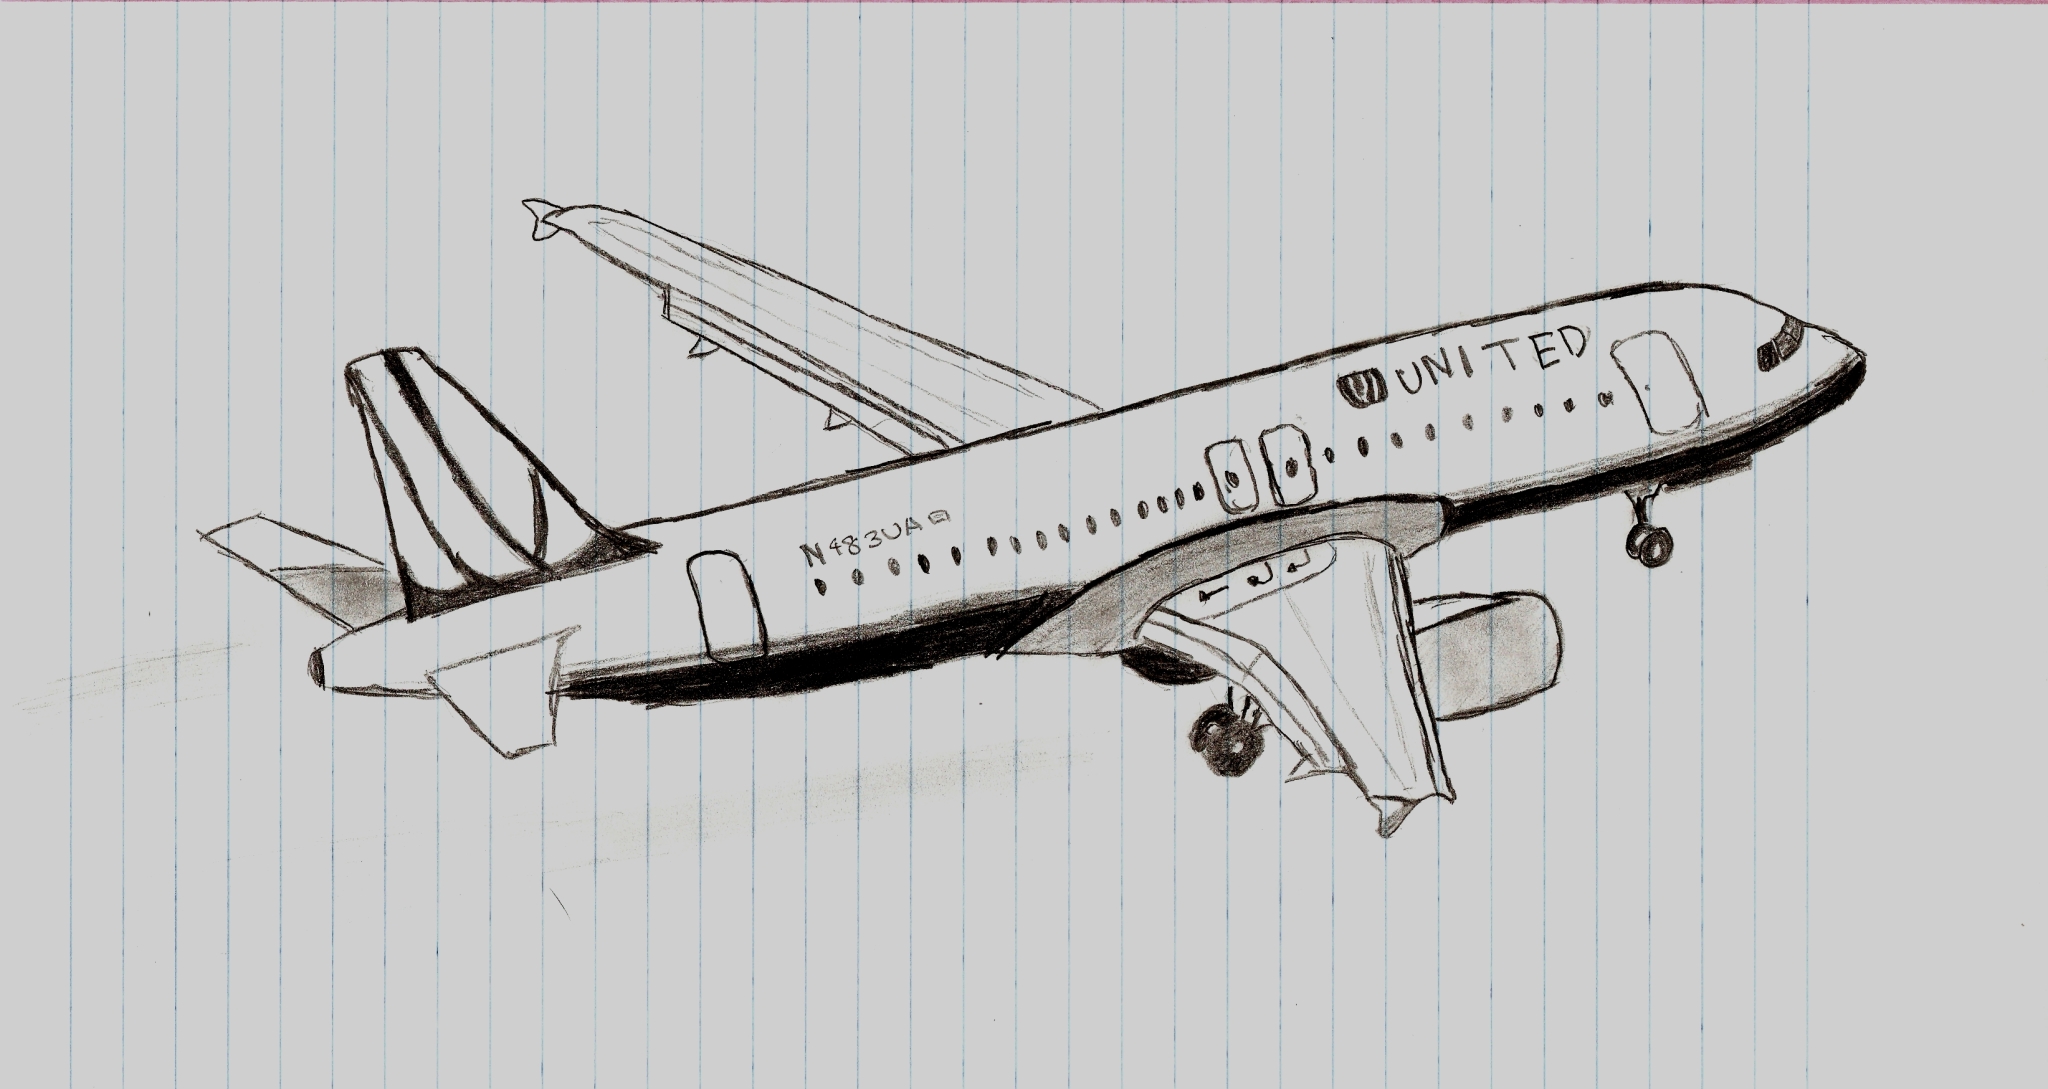 airplane simple drawing tumblr